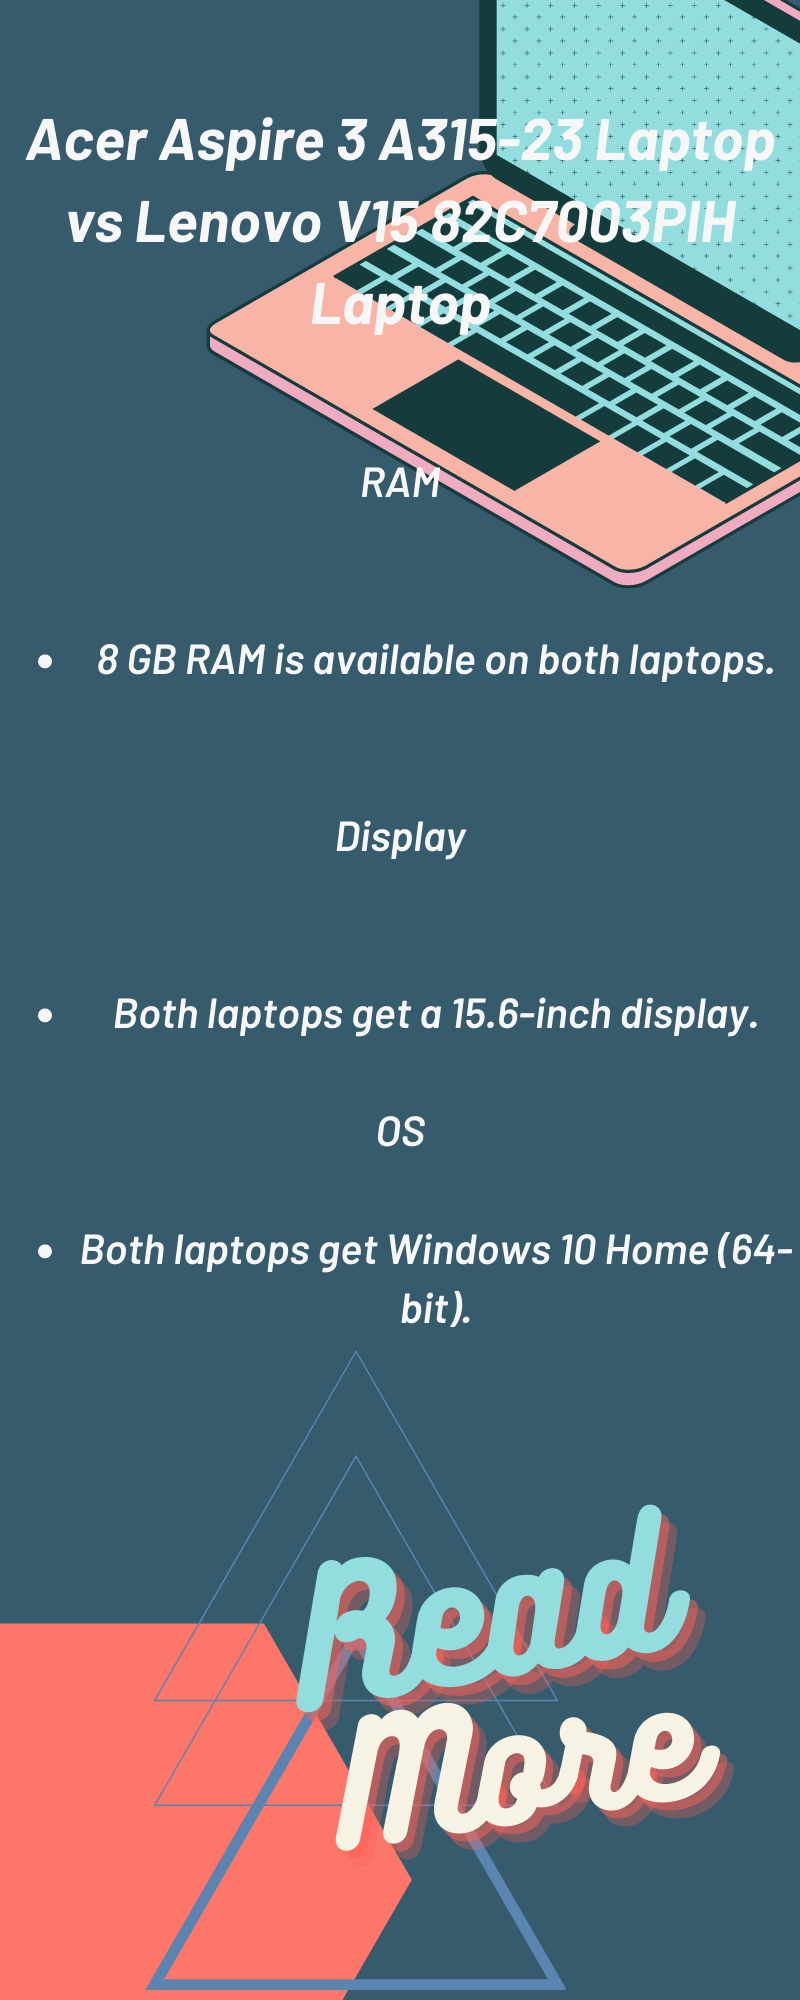 Acer Aspire 3 A315-23 Laptop vs Lenovo V15 82C7003PIH Laptop